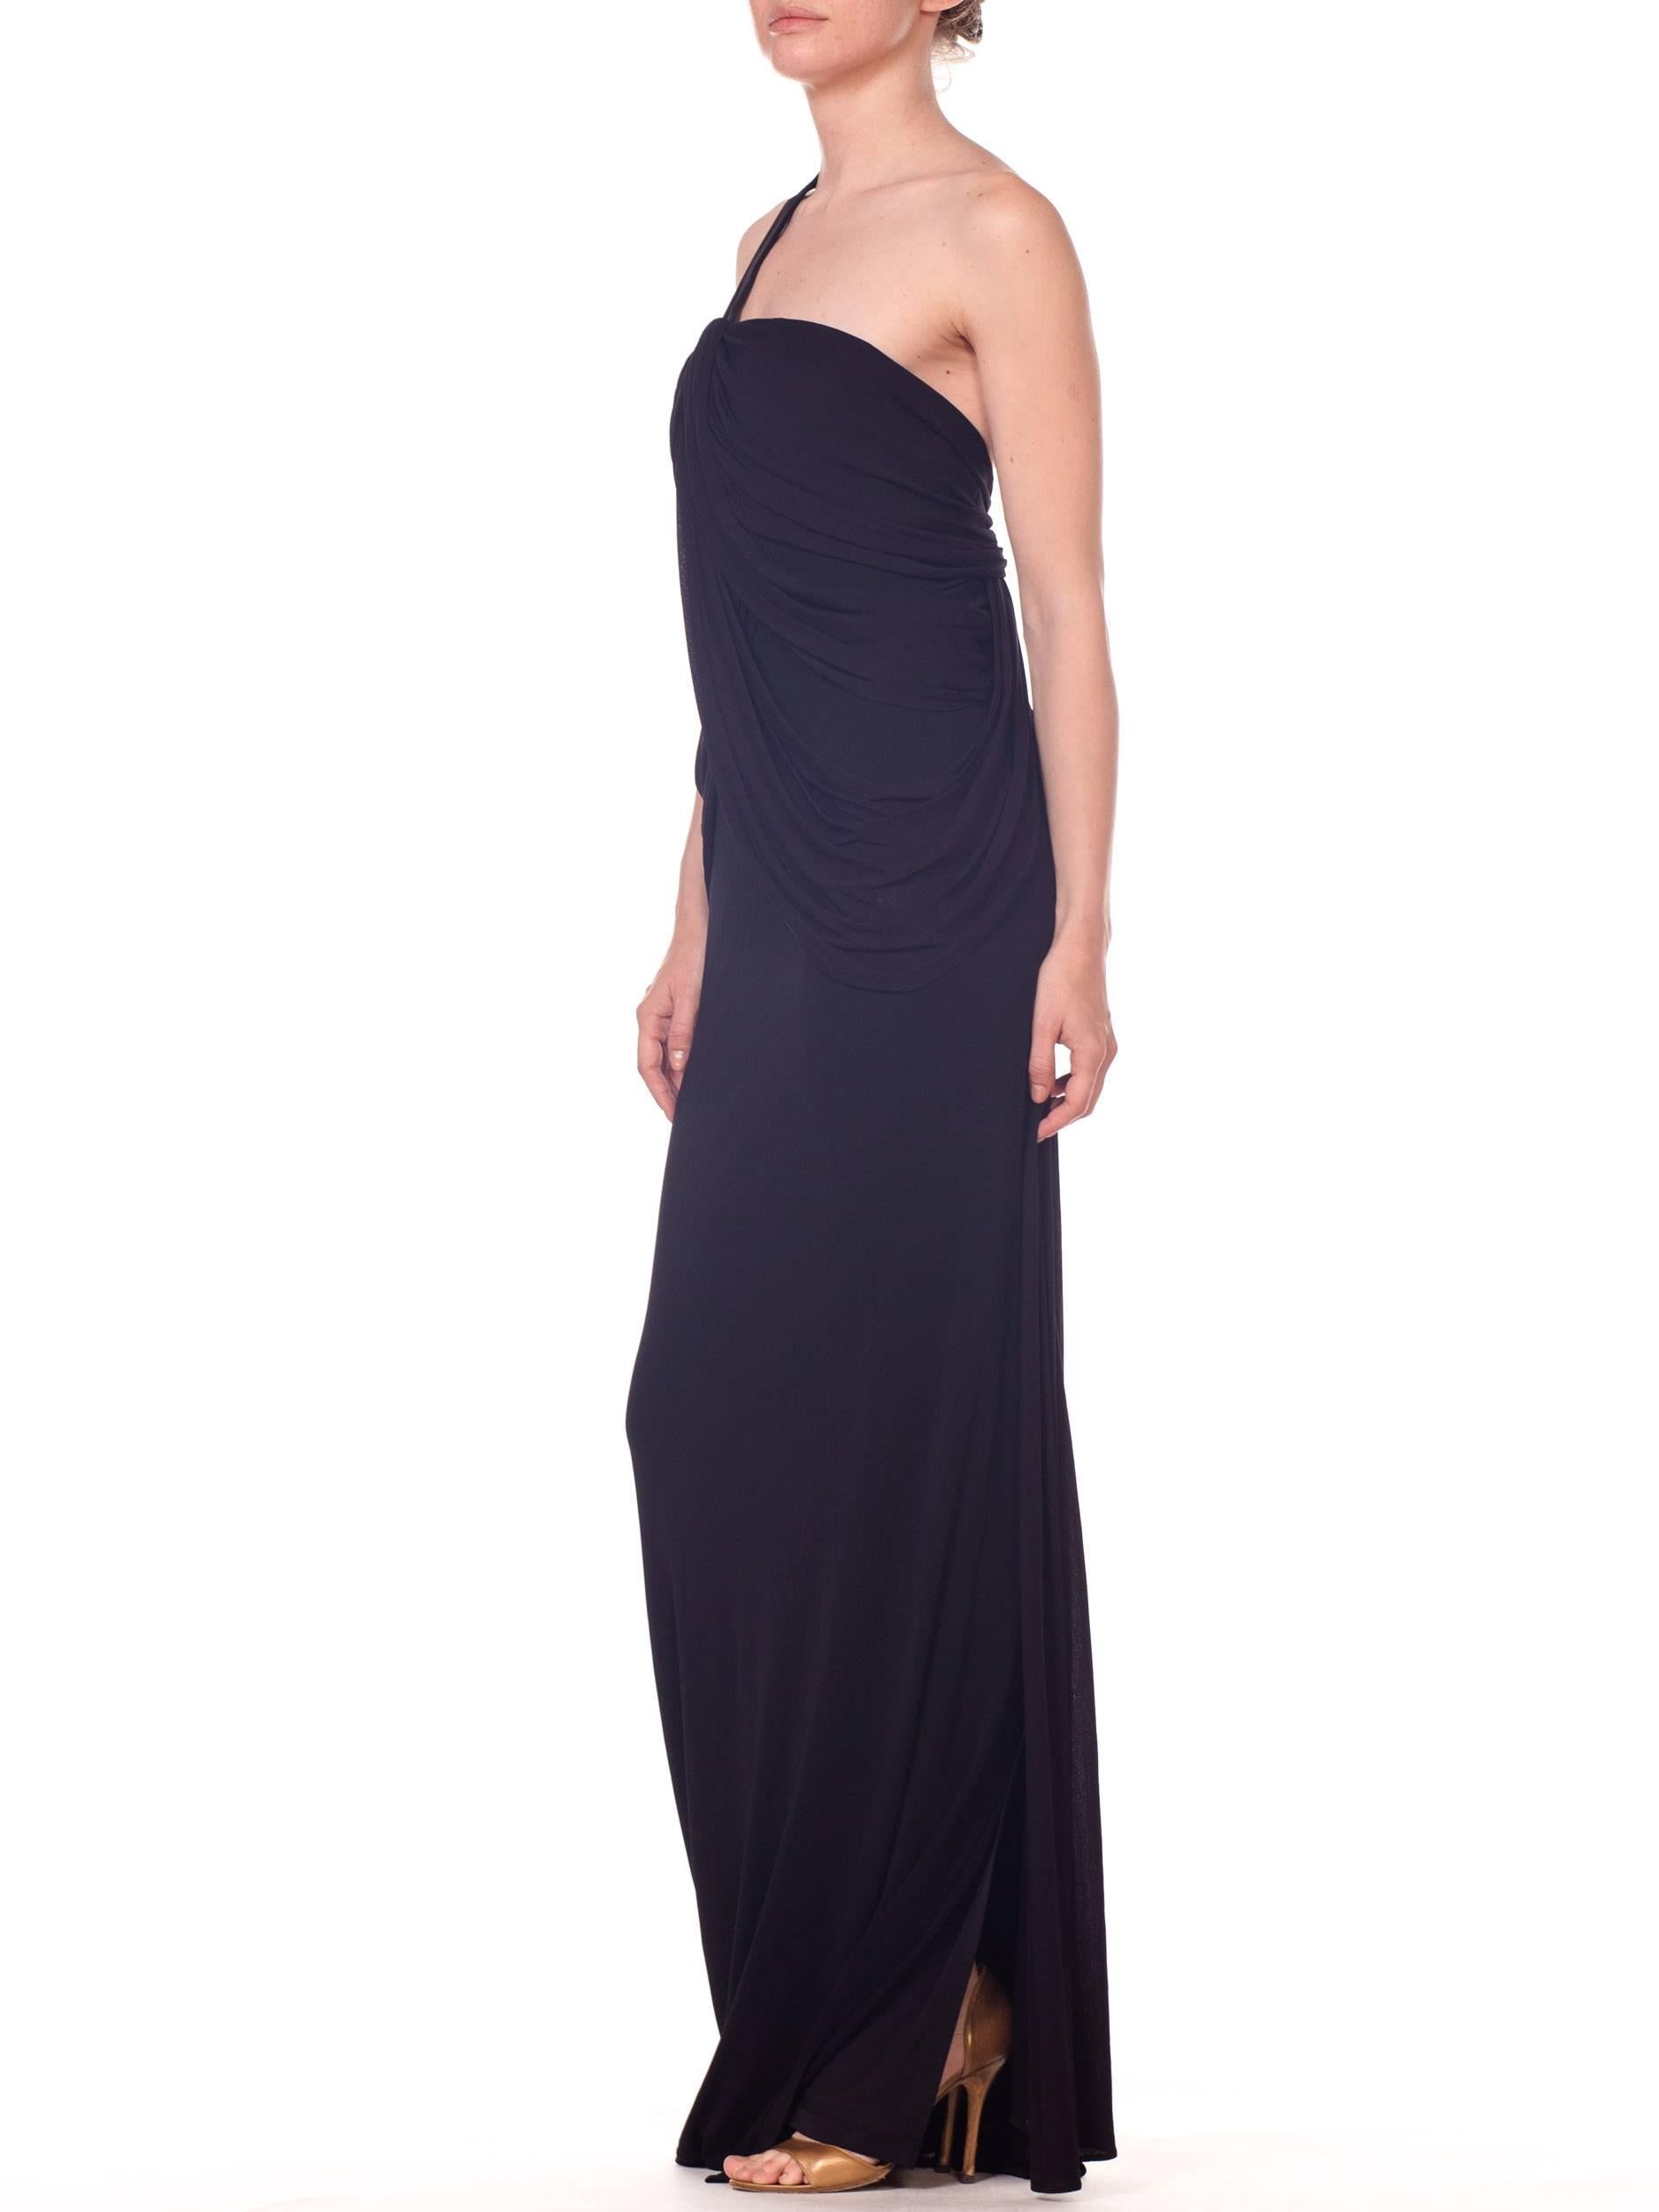 Women's 2000S Black Poly/Viscose Jersey Slinky Asymmetrically Draped Gown For Sale